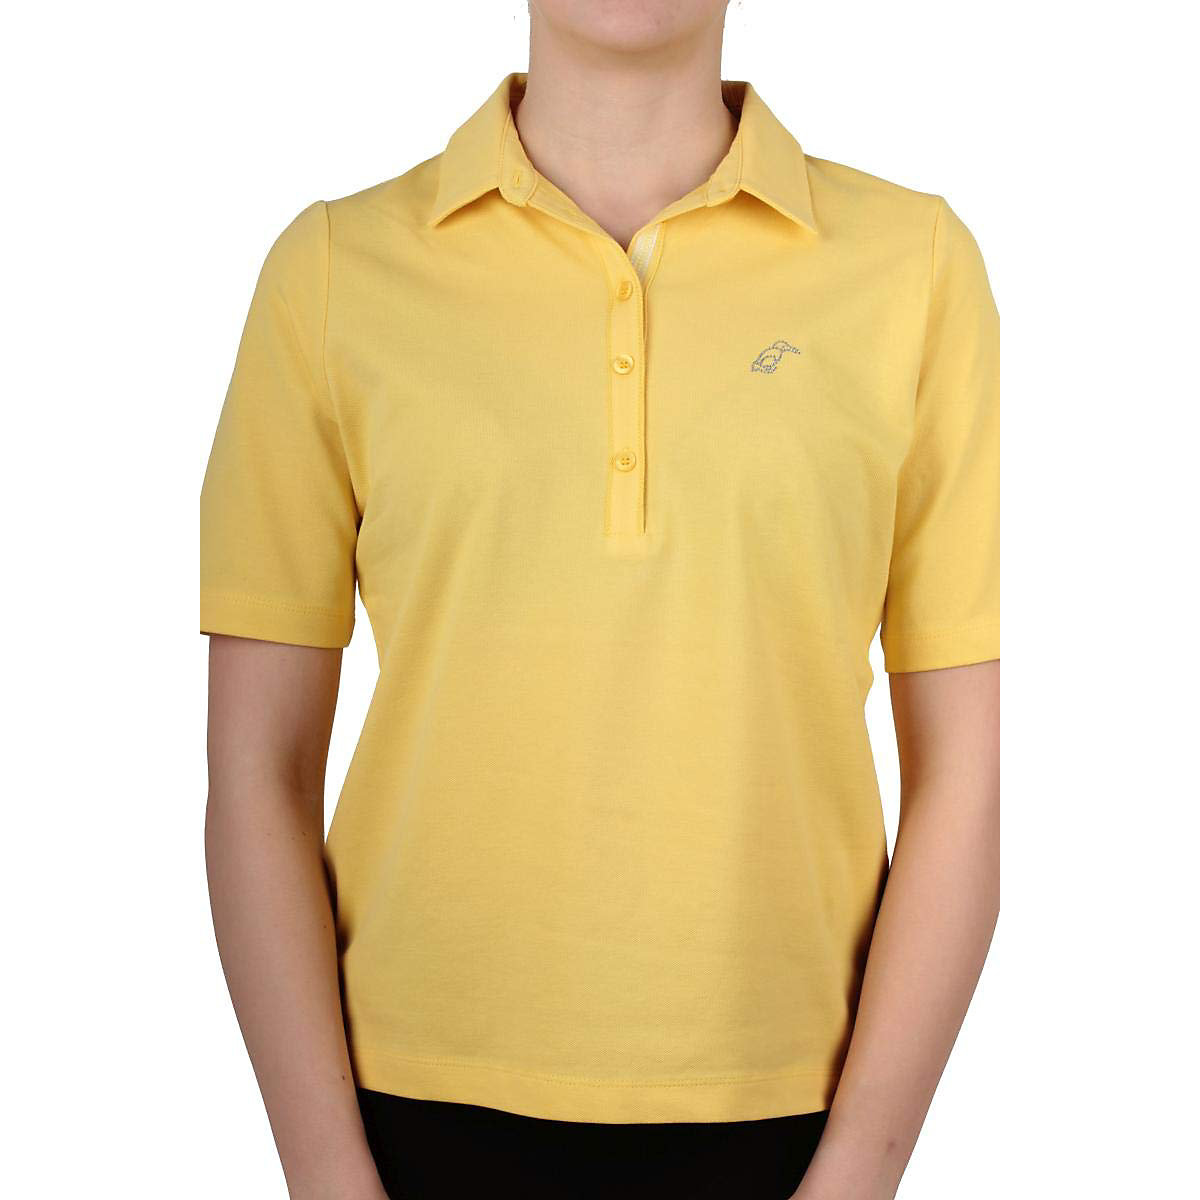 Rabe Poloshirt kurzarm gelb